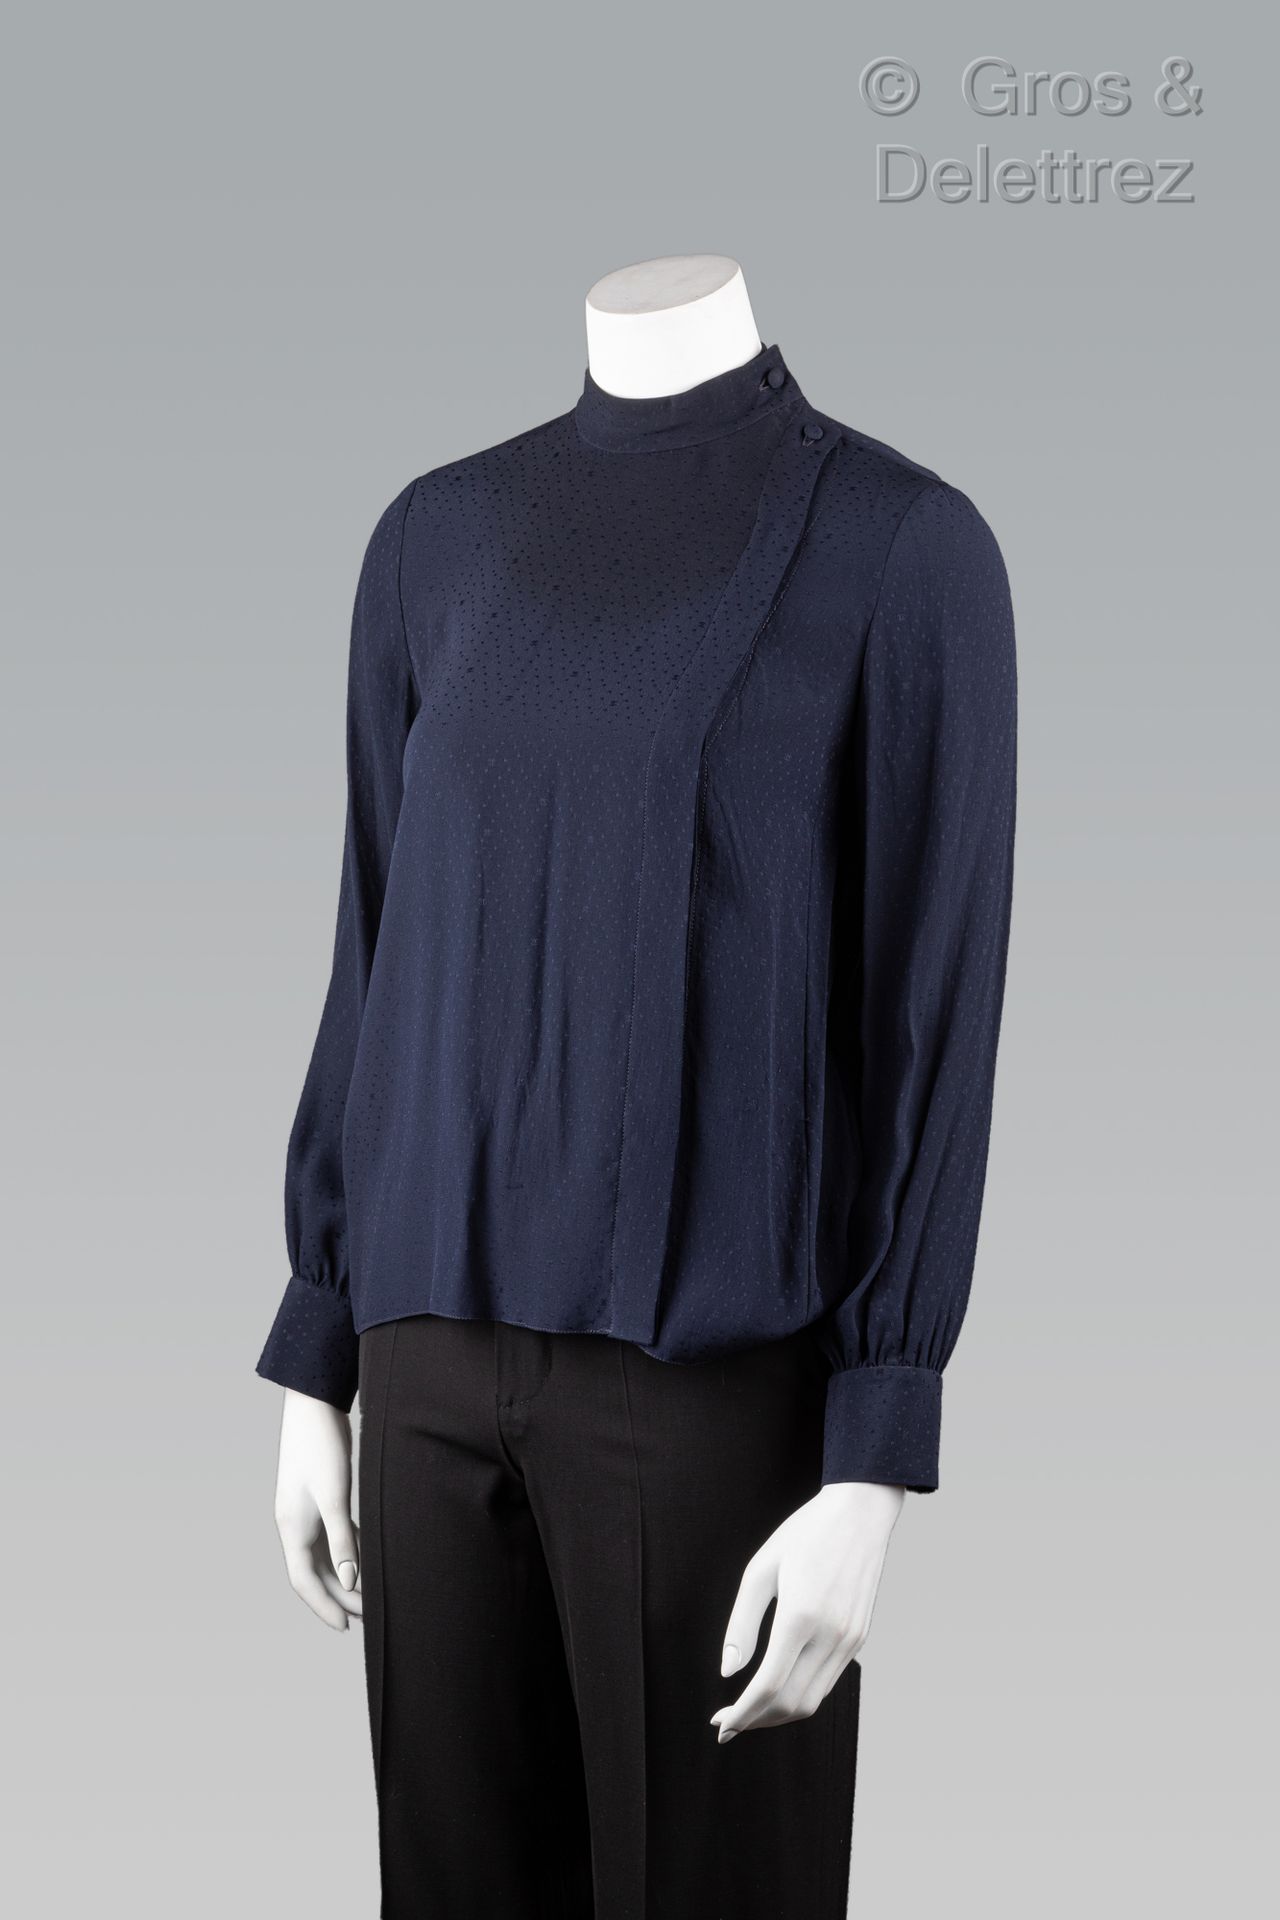 Null 香奈儿专卖店

深蓝色真丝绉绸衬衫，有圆点和锉刀图案，小立领，衣襟下有不对称单扣，长袖。黑色标签，白色图案。